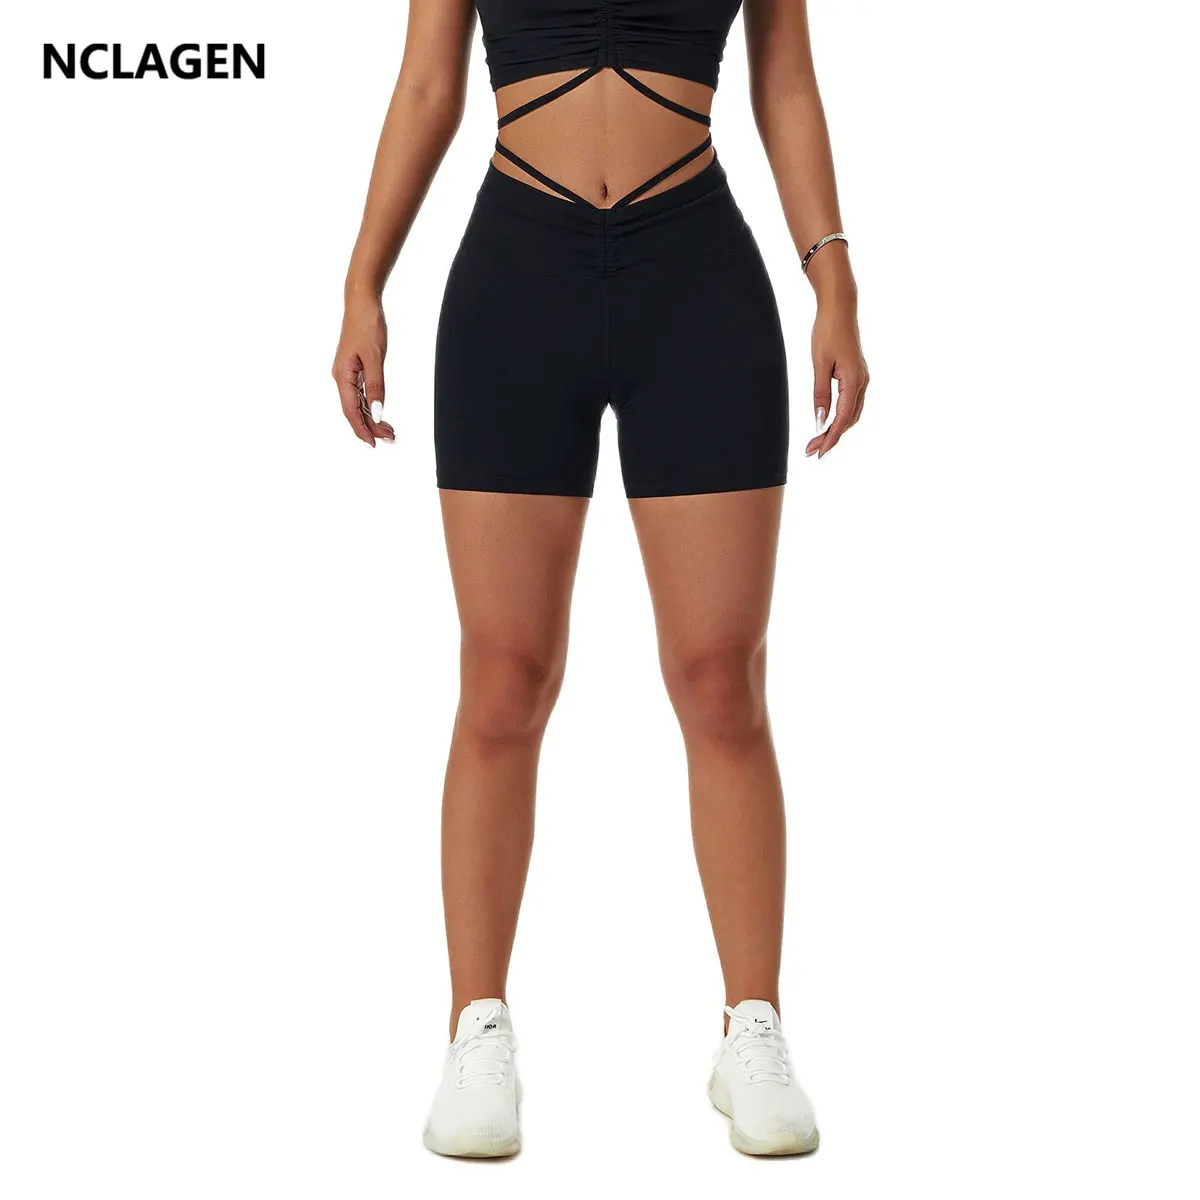 

NCLAGEN Yoga Shorts Women Running Sports Short High Waist Fitness Leggings GYM Naked Feel Buttery-Soft Elastic Workout Bottoms